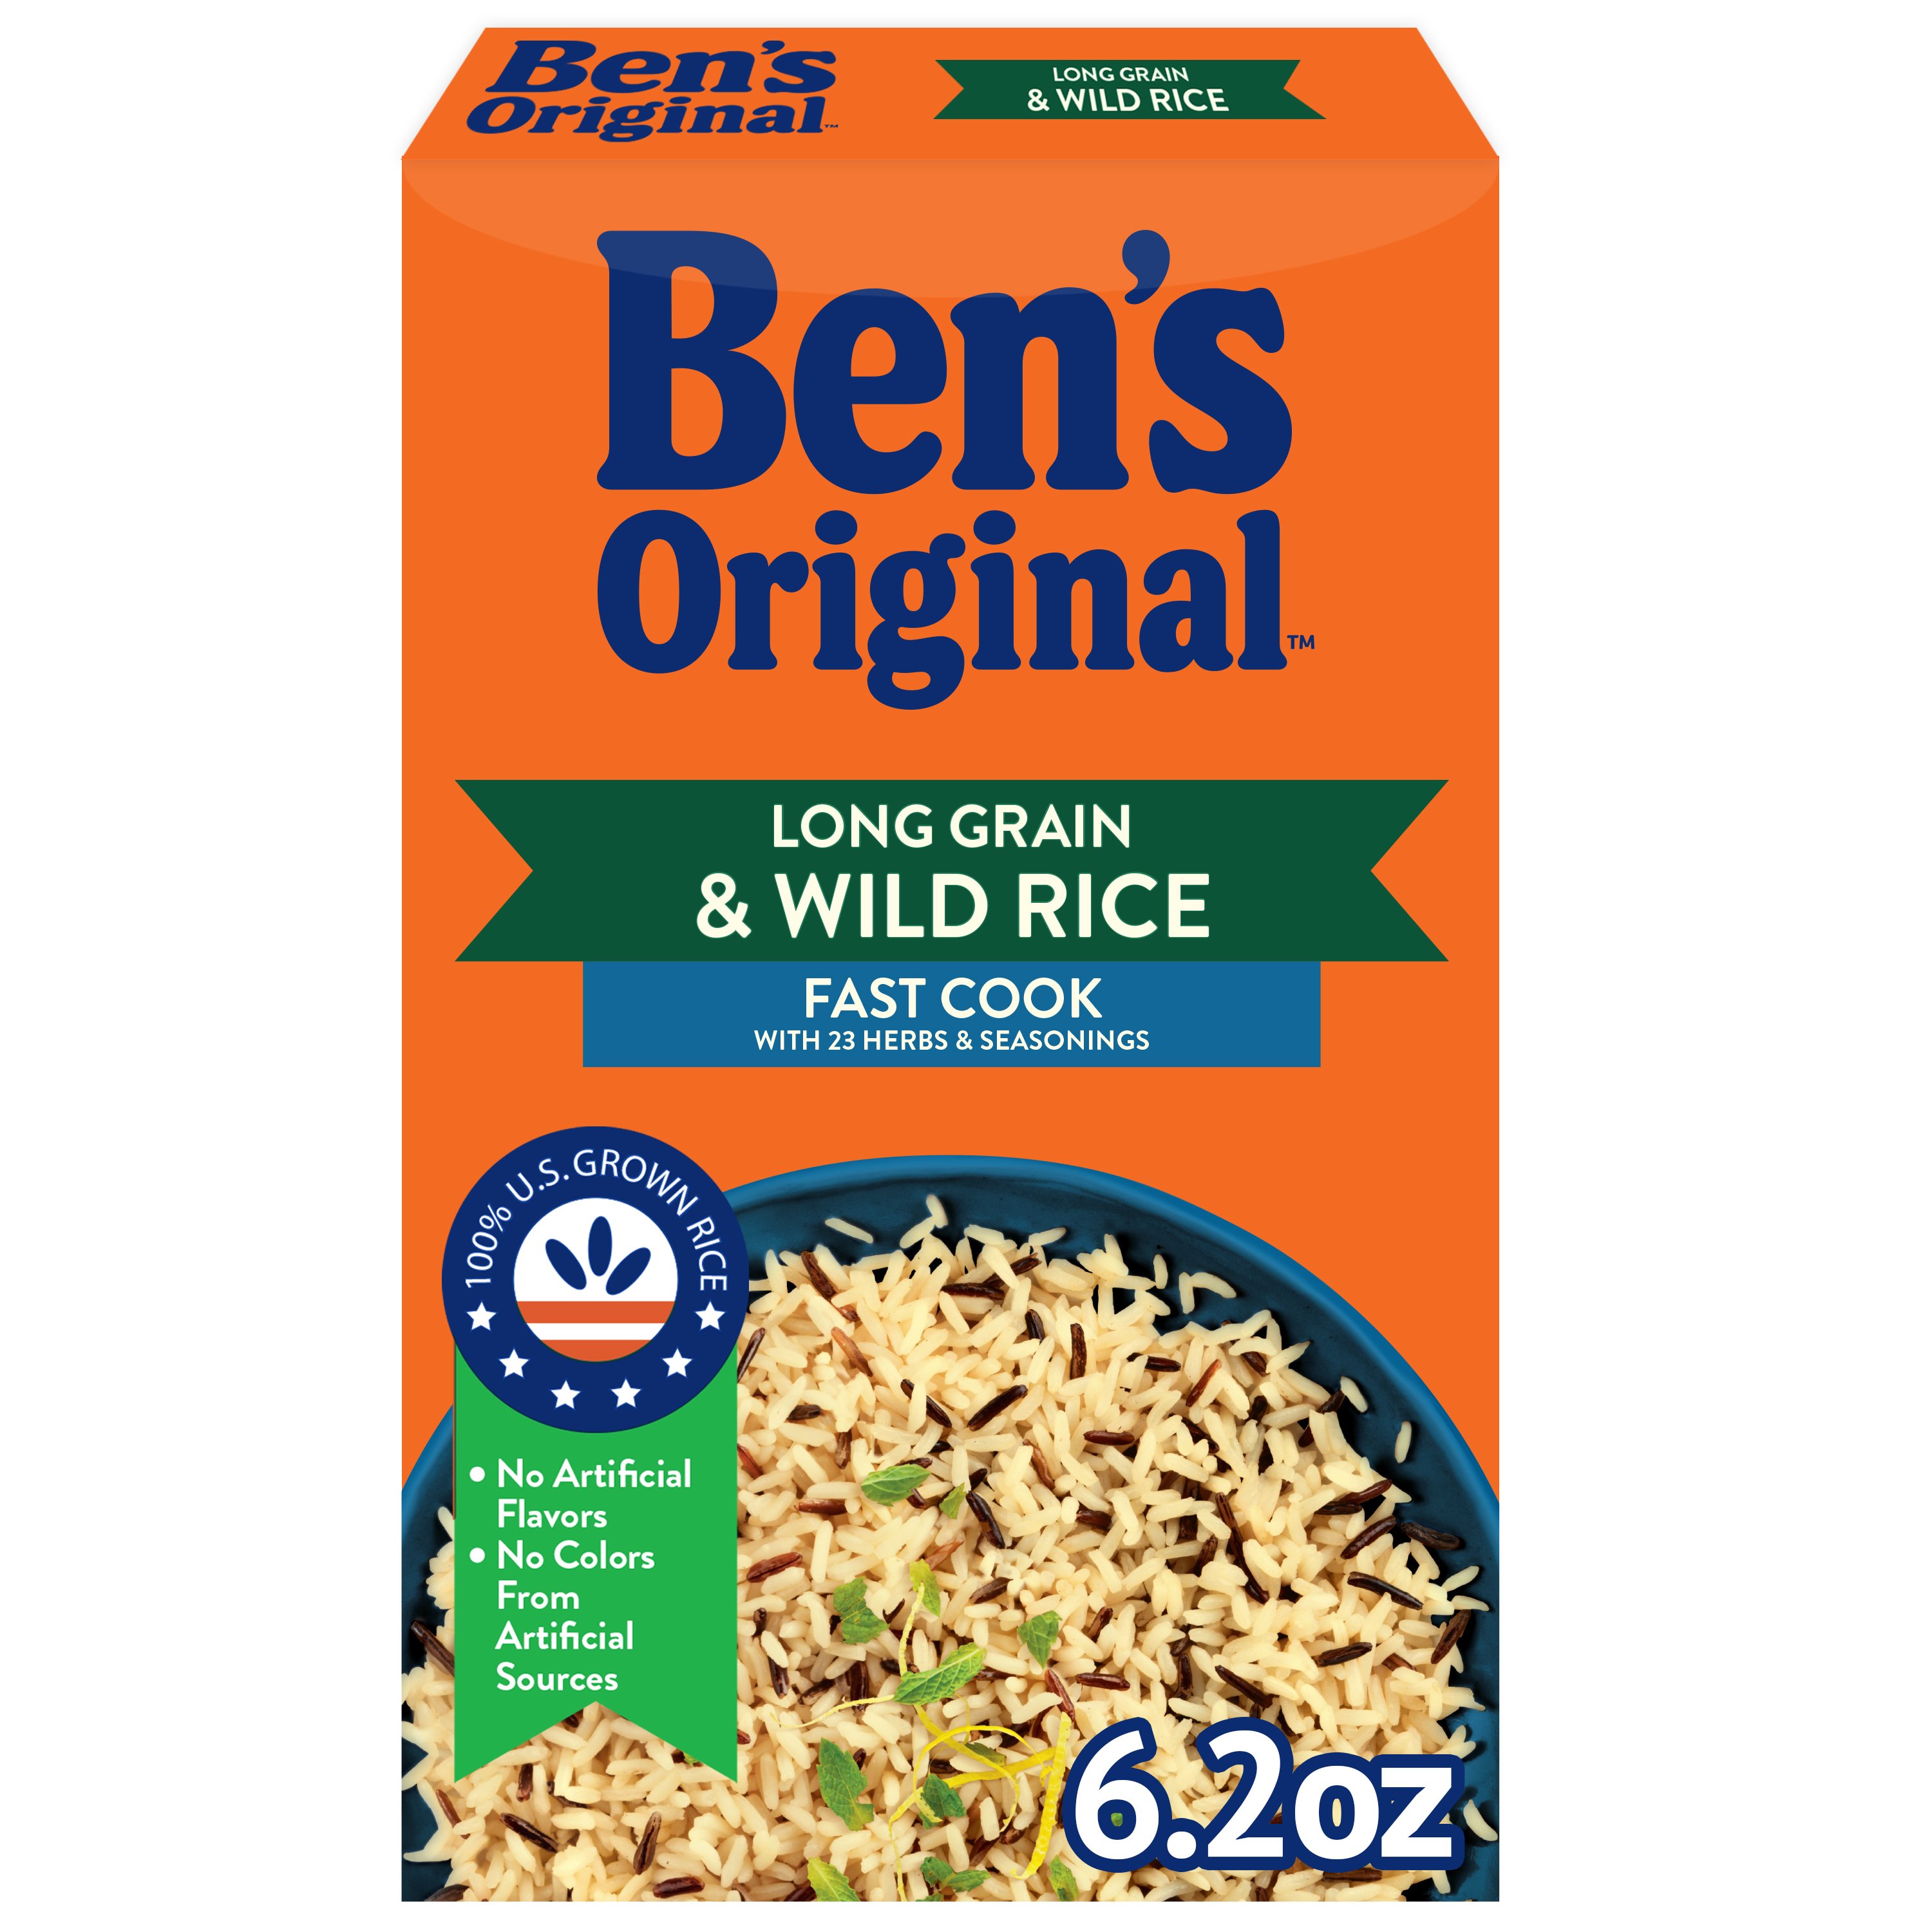 Ben's Original Fast Cook Long Grain and Wild Rice